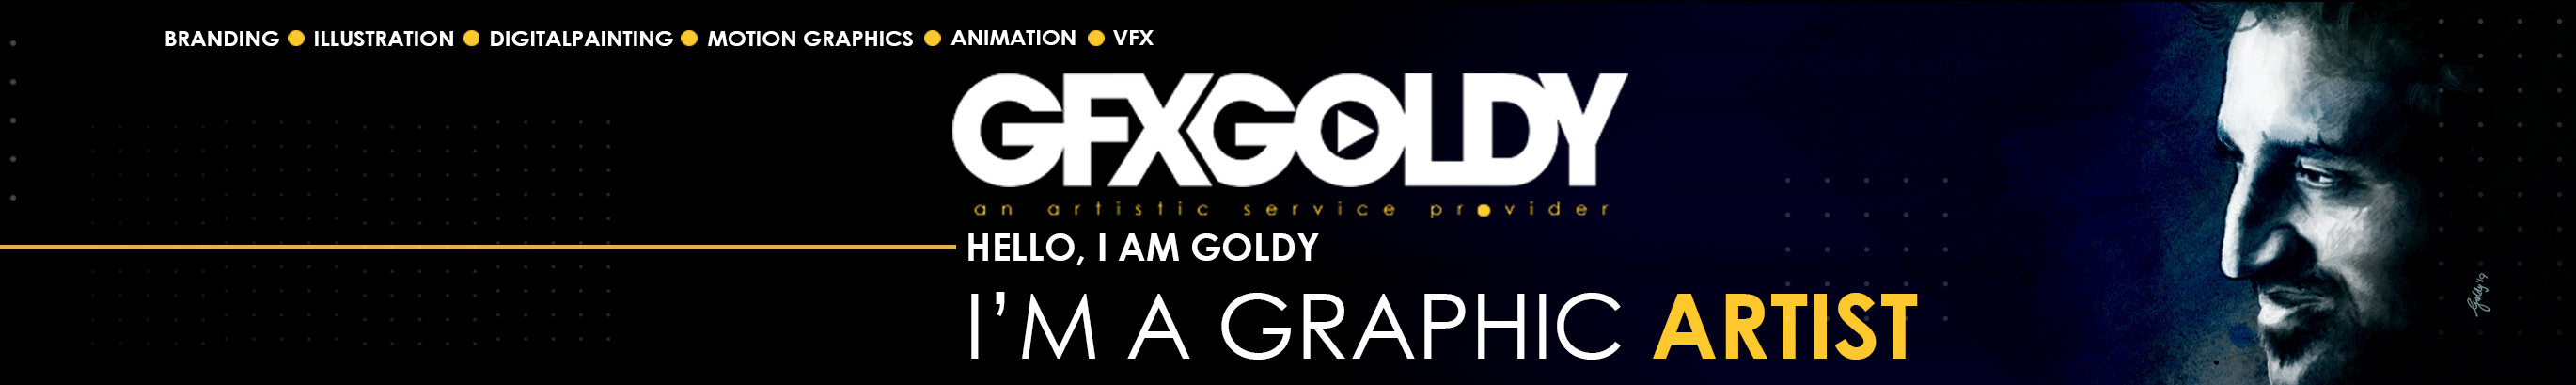 GFX GOLDY's profile banner